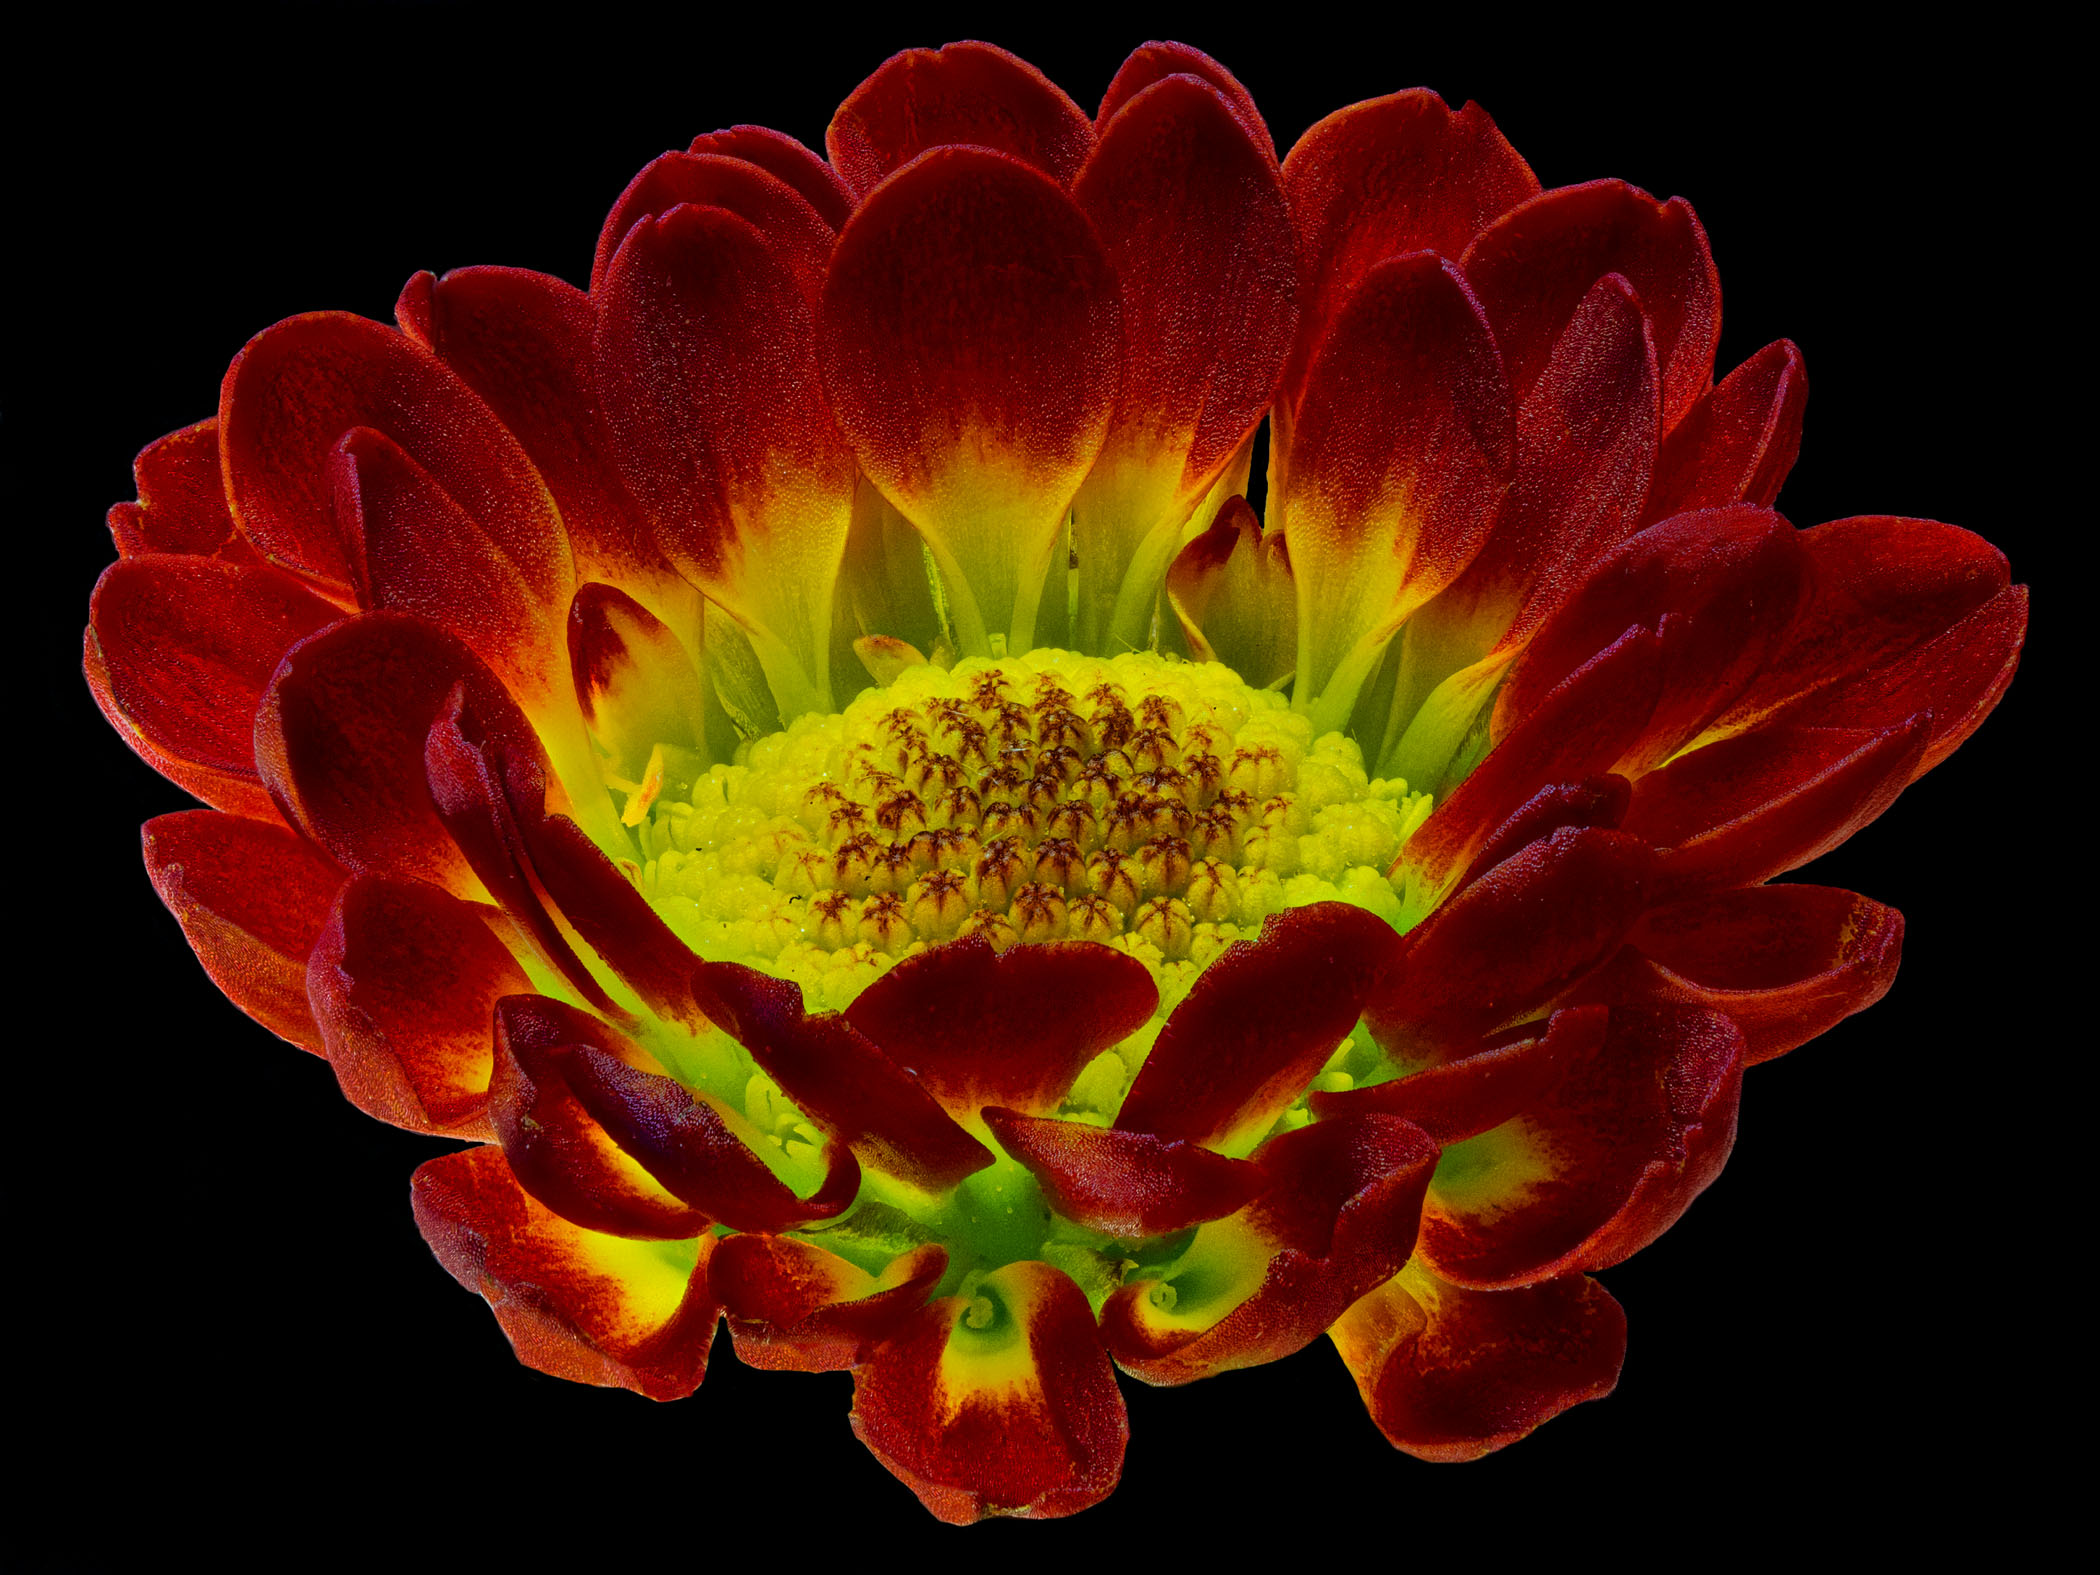 1d-Flowers-Gaillardia